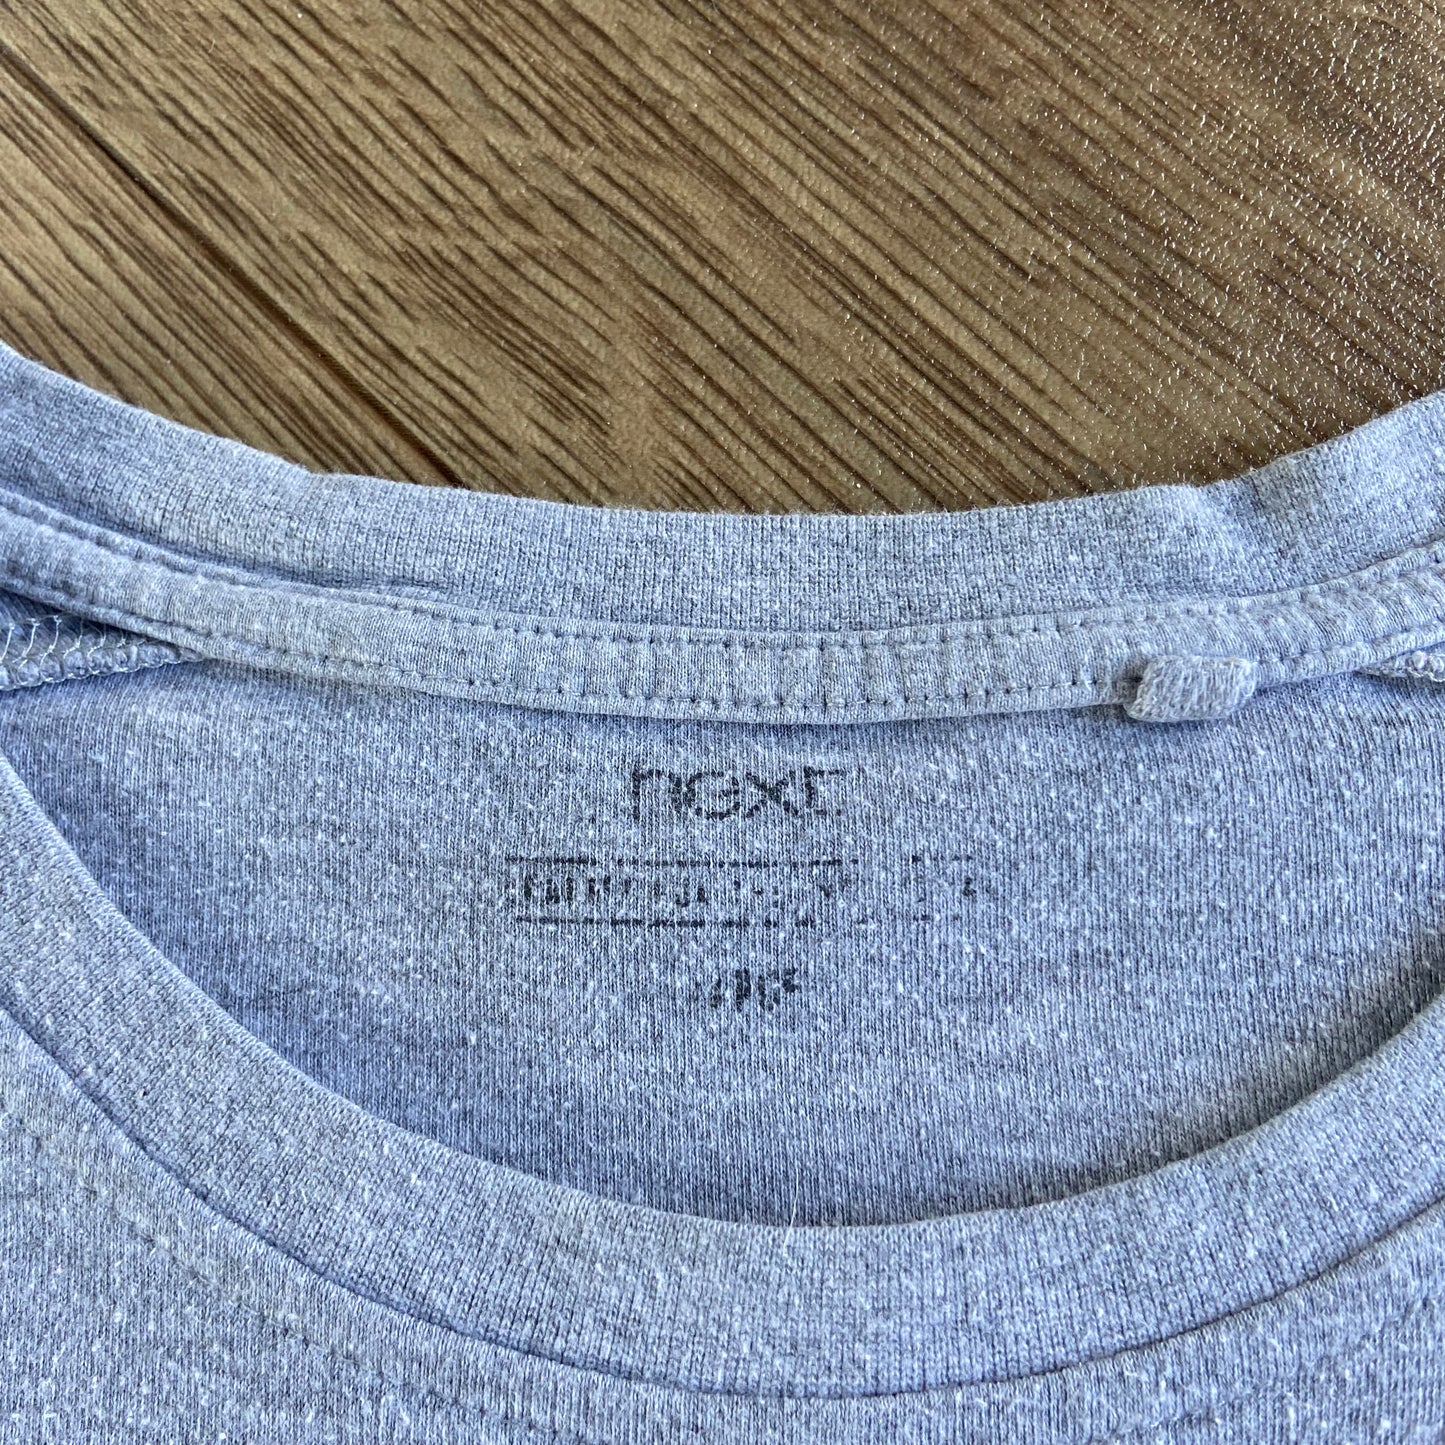 Stingray Reimagined “Barbican” T Shirt, Size L Grey